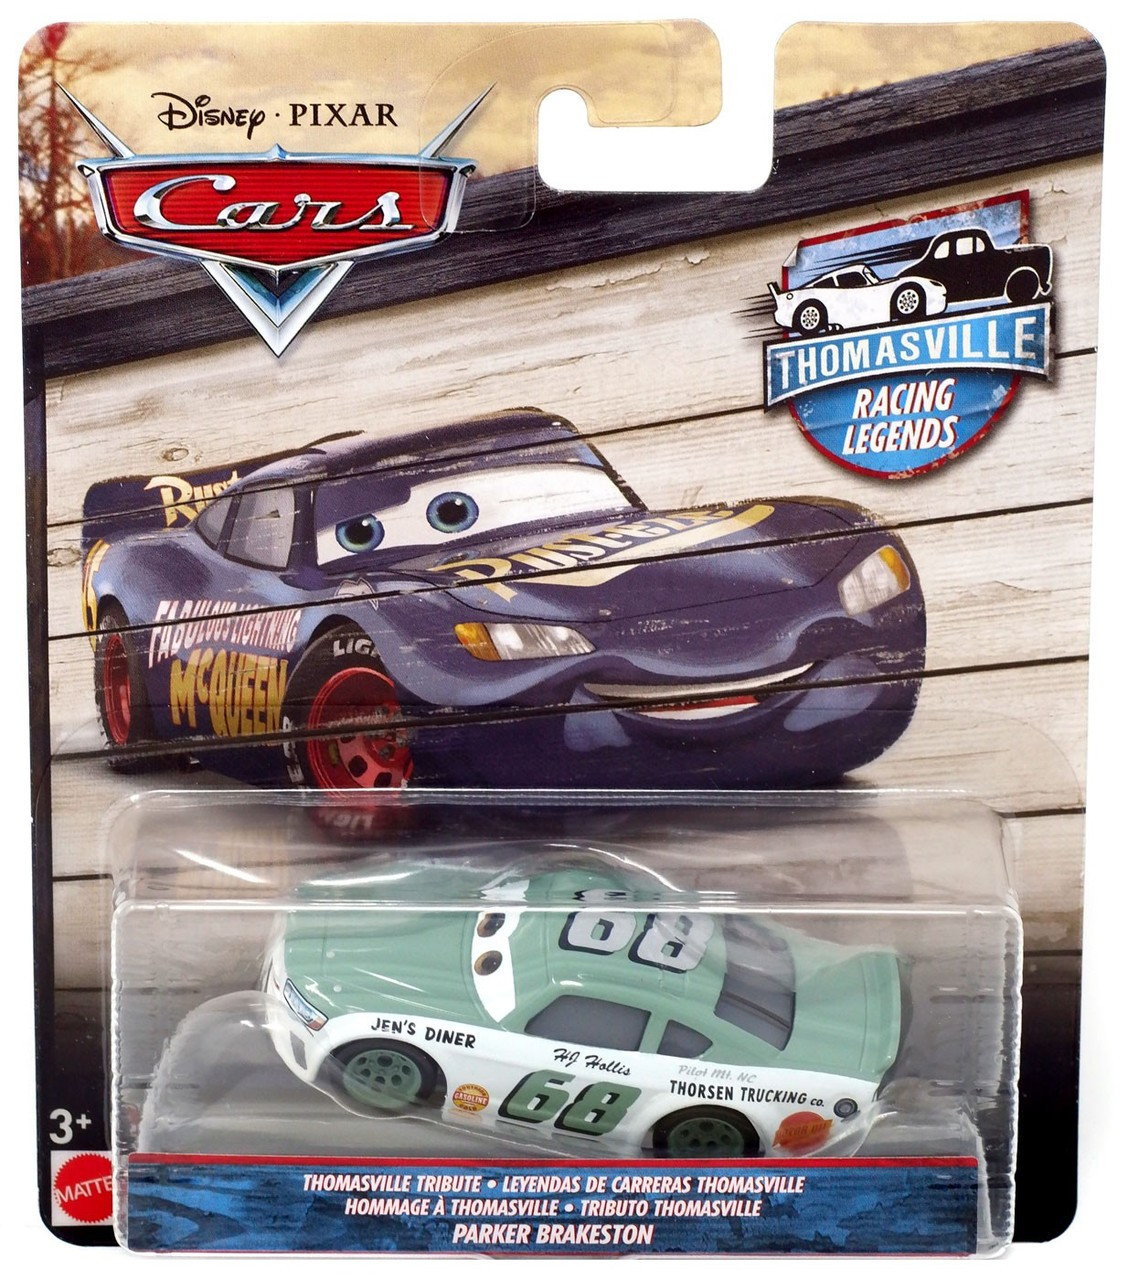 Disney Pixar Cars Cars 3 Thomasville Racing Legends Parker Brakeston Diecast Car Thomasville Tribute Mattel Toys Toywiz - pops diner decal roblox